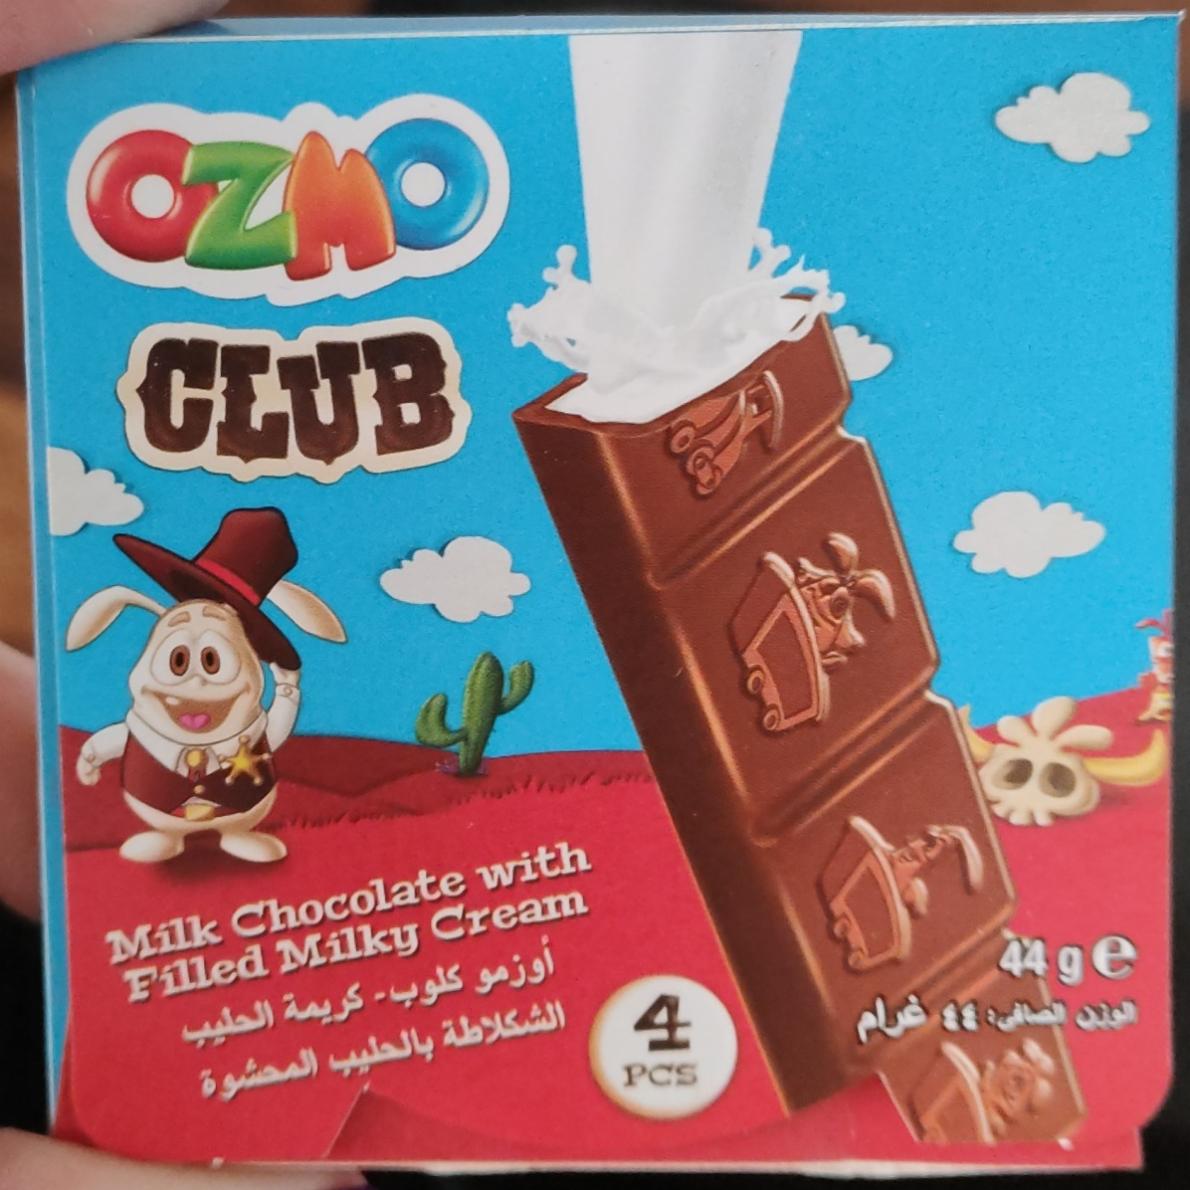 Фото - Молочный шоколад с начинкой Ozmo Club (Озмо клаб)